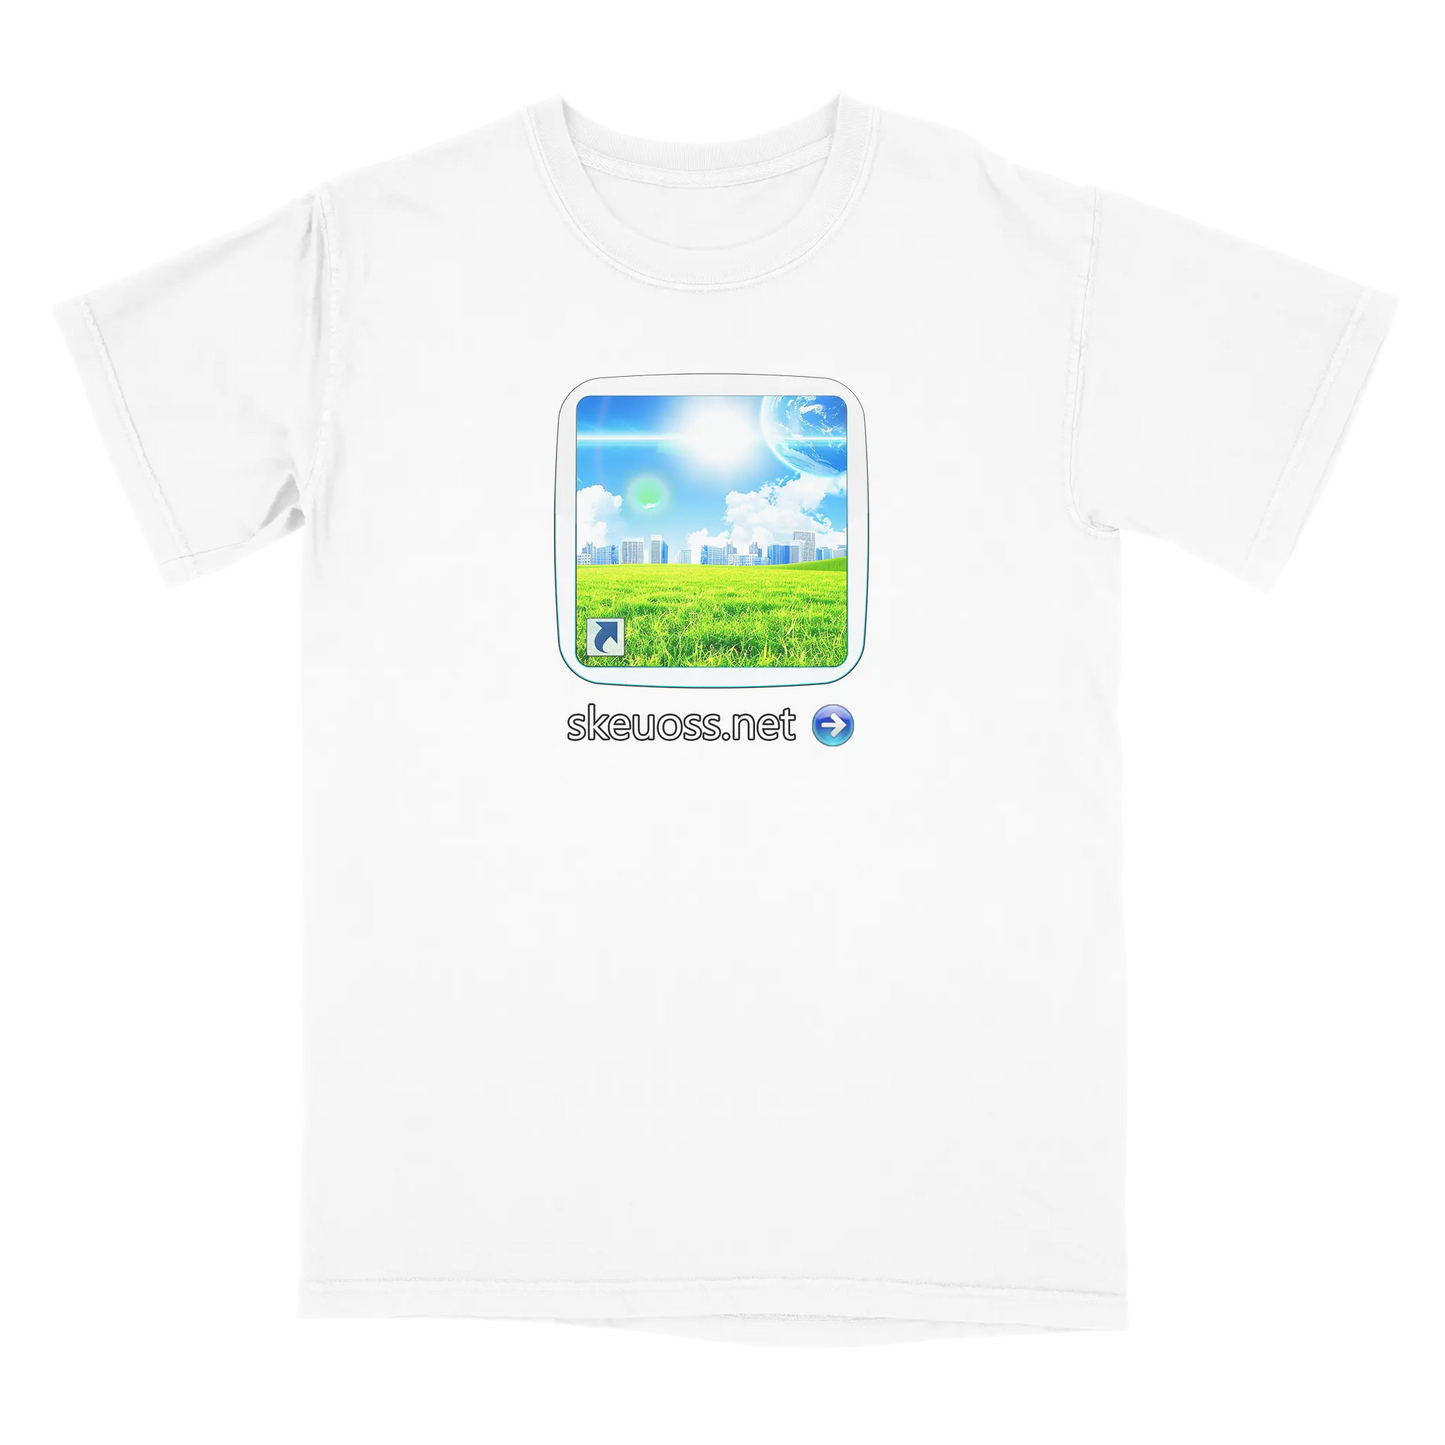 Frutiger Aero T-shirt - User Login Collection - User 147